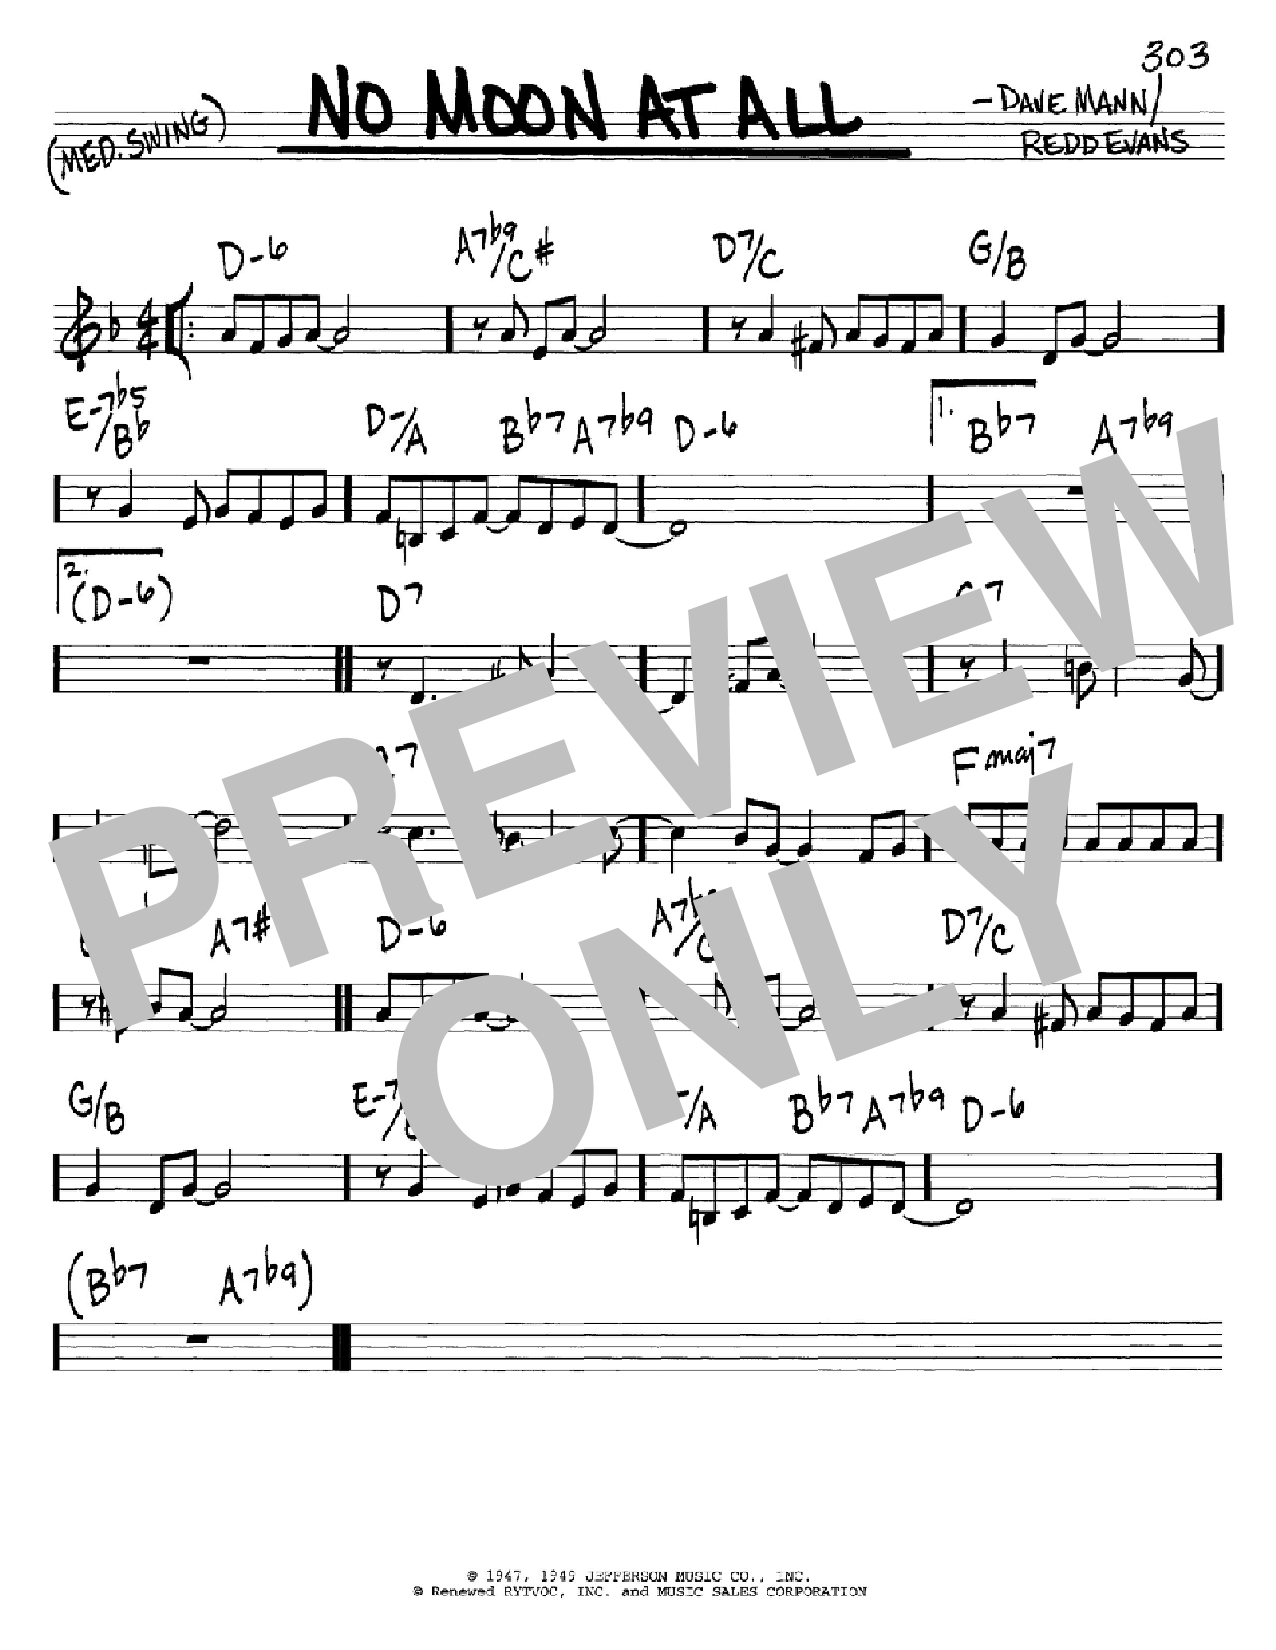 Dave Mann No Moon At All Sheet Music Notes & Chords for Real Book - Melody, Lyrics & Chords - C Instruments - Download or Print PDF